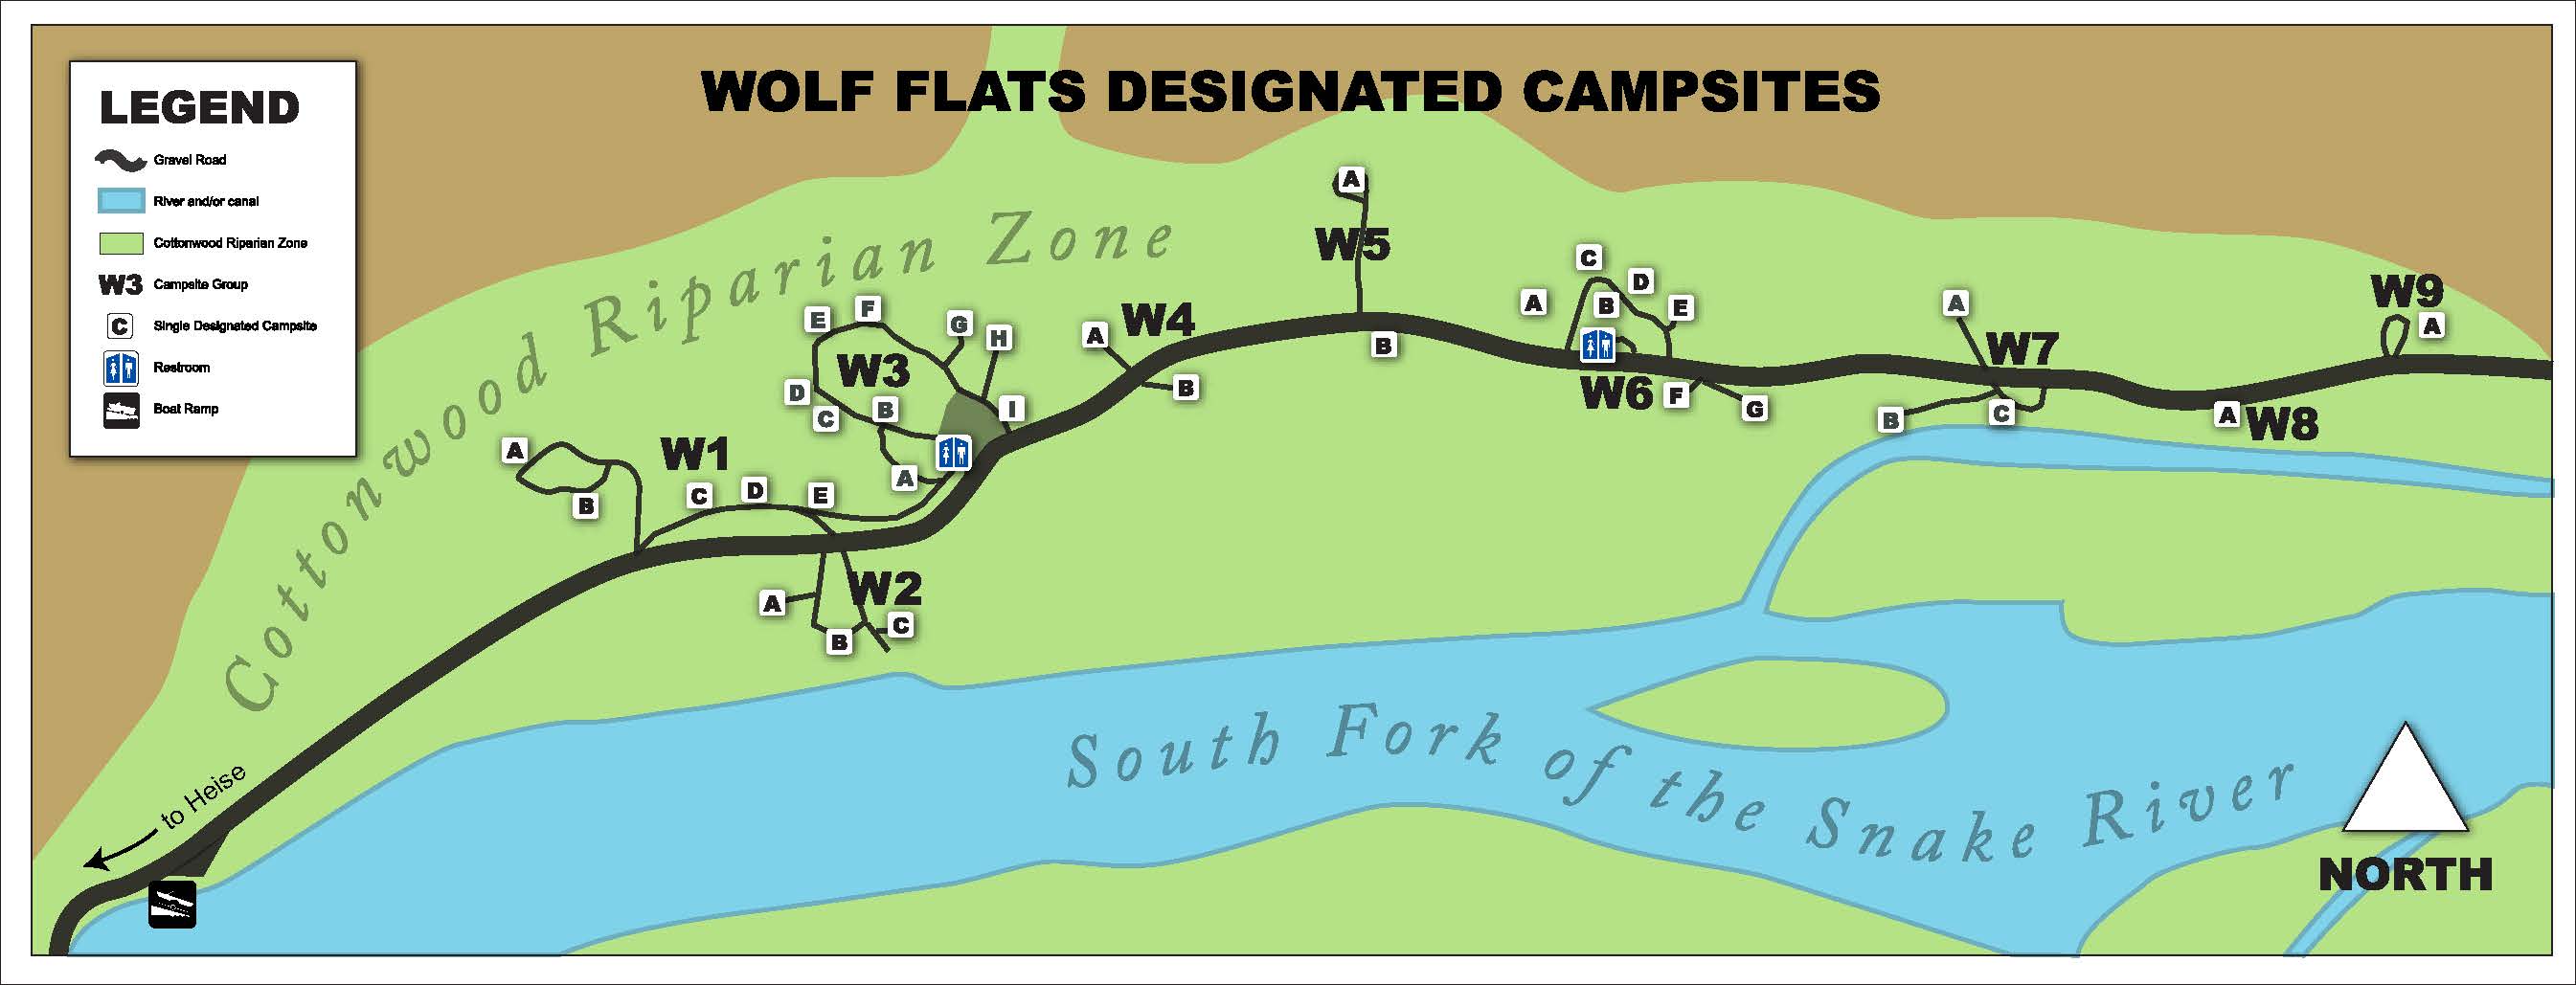 Media Center Public Room Idaho Wolf Flats Camping Map Bureau Of Land Management 4027